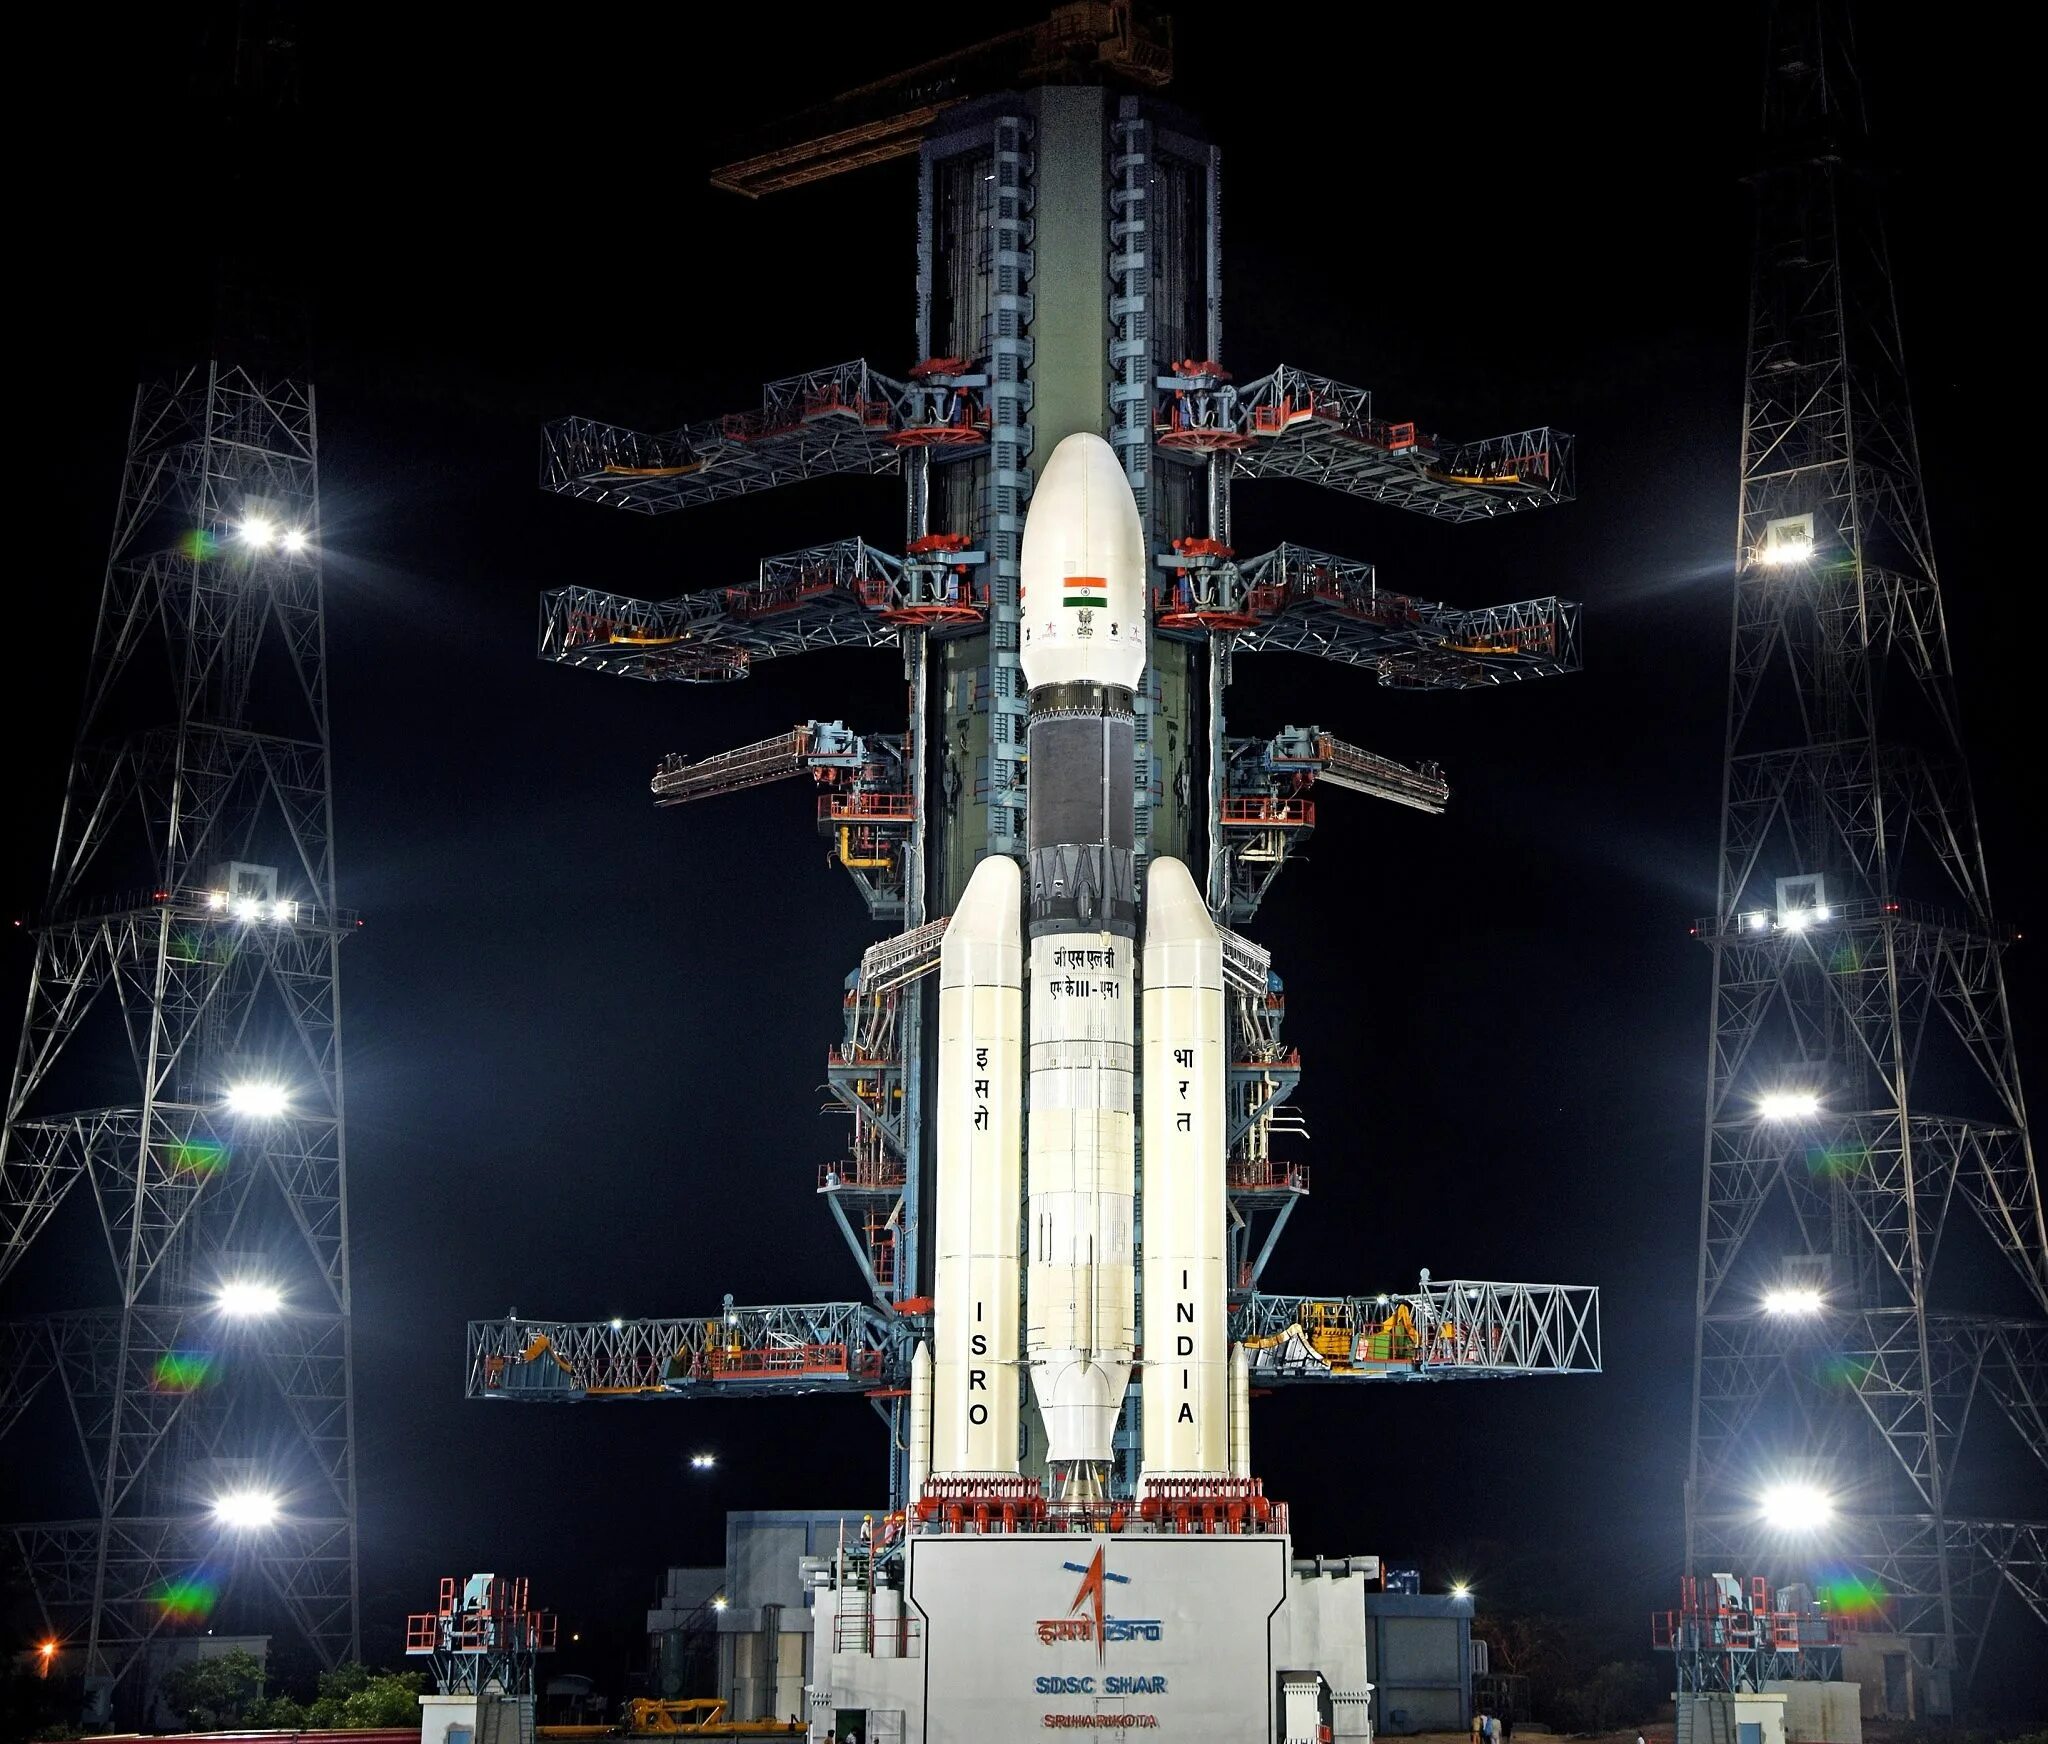 Индийская ракета GSLV. Чандраян-2. ISRO космодром Индии. GSLV III ракета-носитель. Space 22